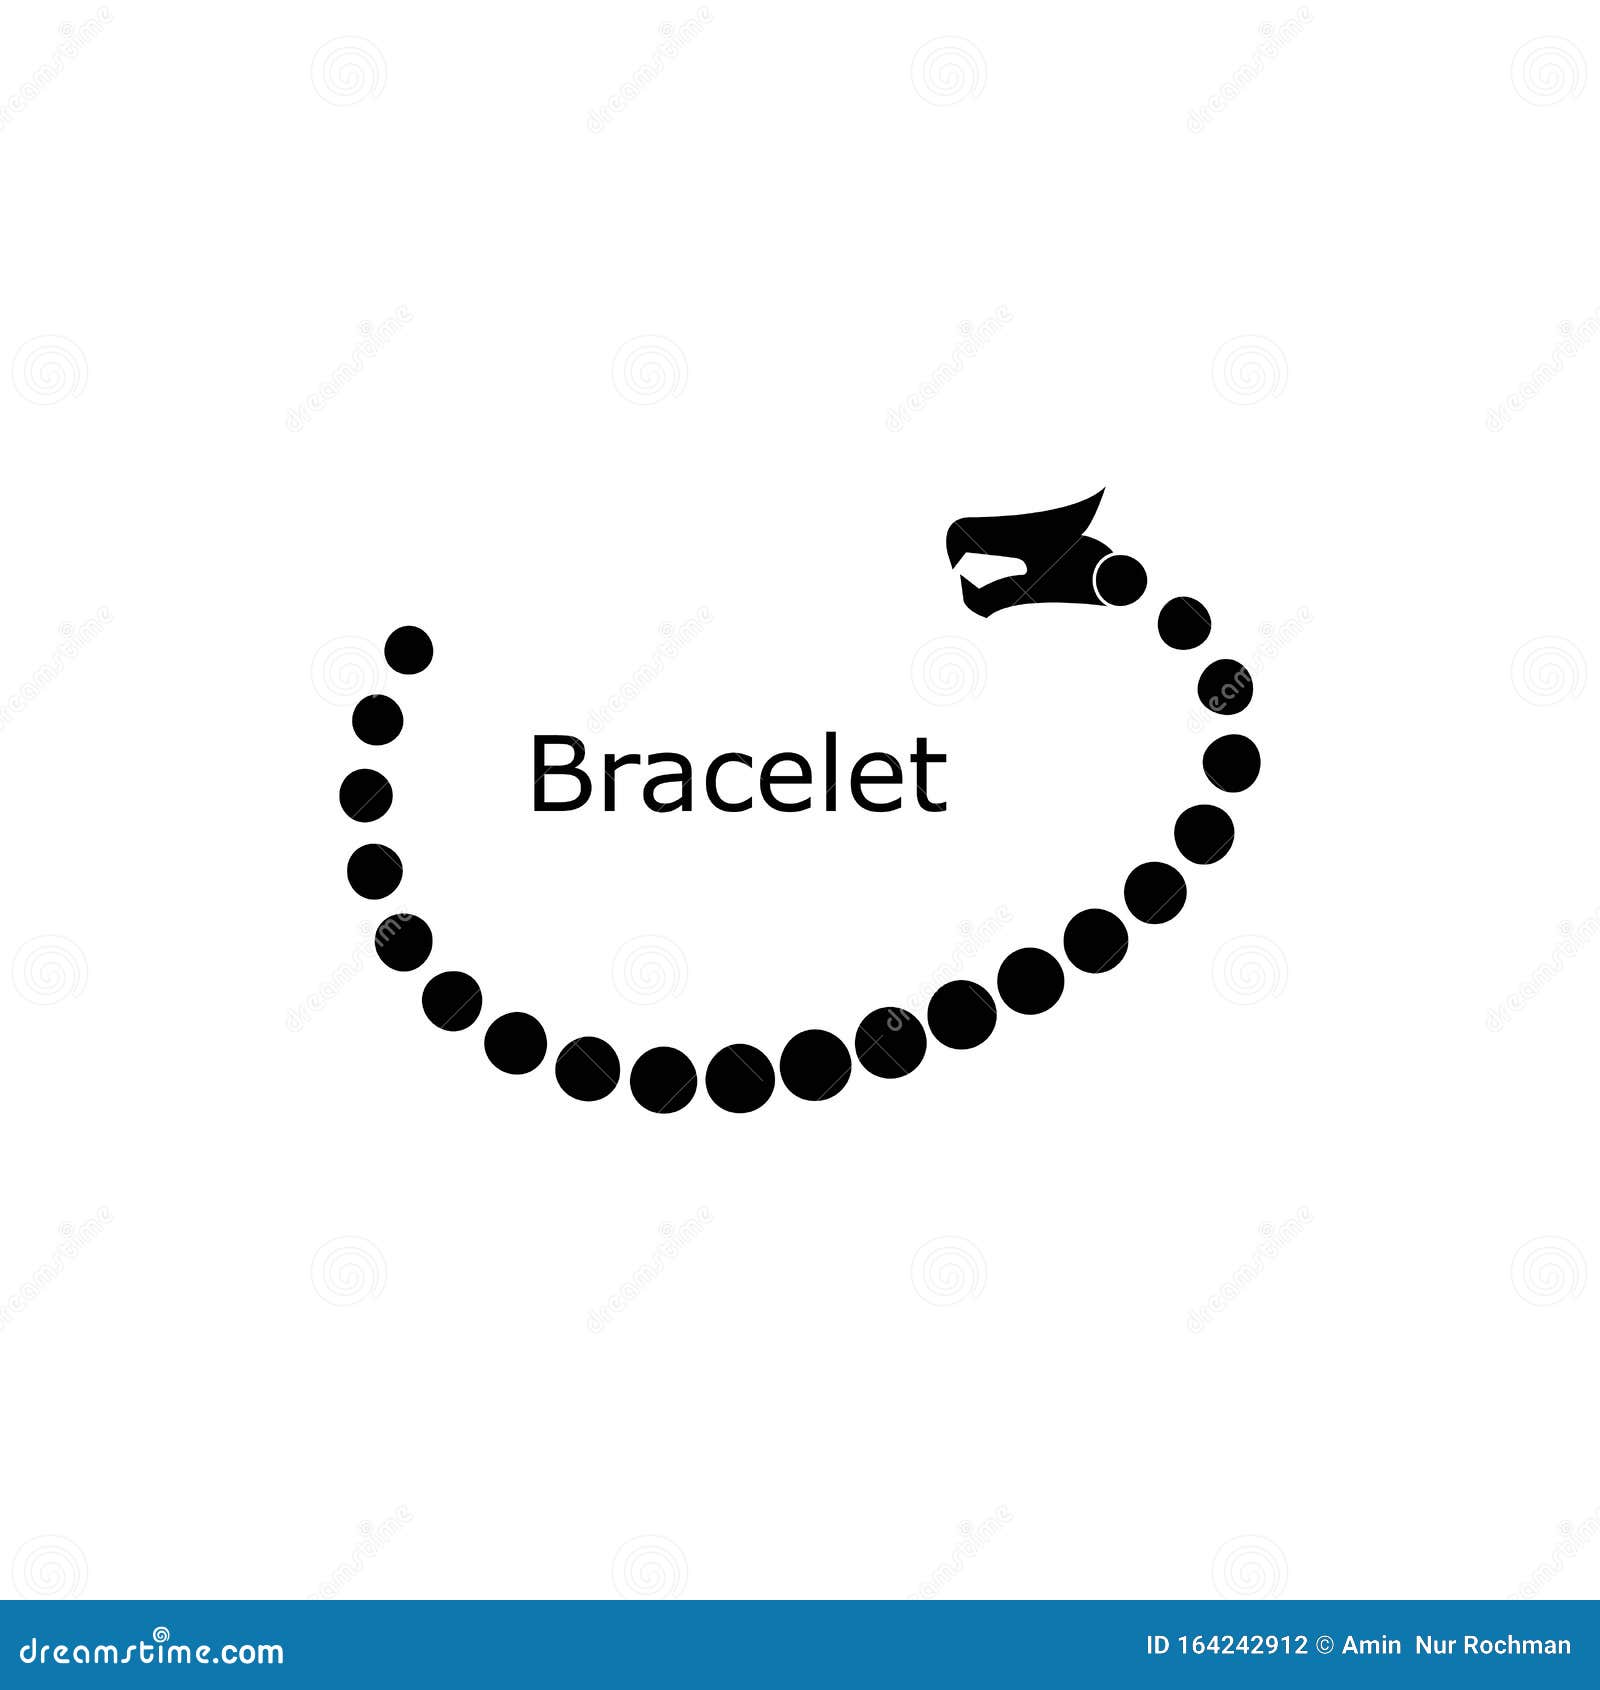 bracelet-icon-trendy-bracelet-logo-concept-on-white-background-from